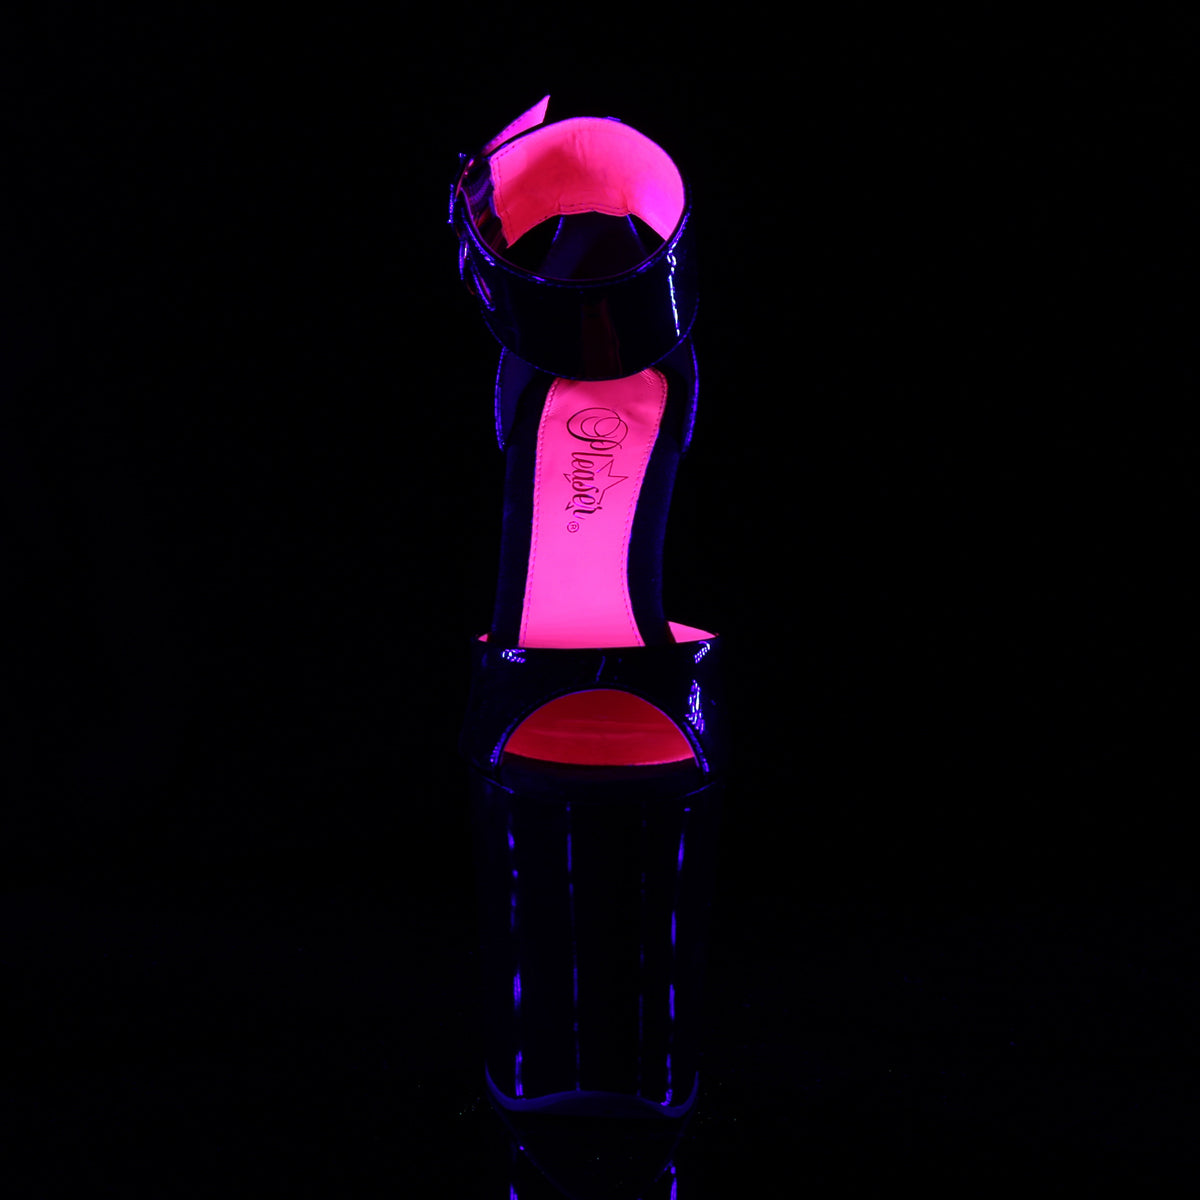 XTREME-875TT Black Patent-Neon Hot Pink/Black Platform Sandal Pleaser